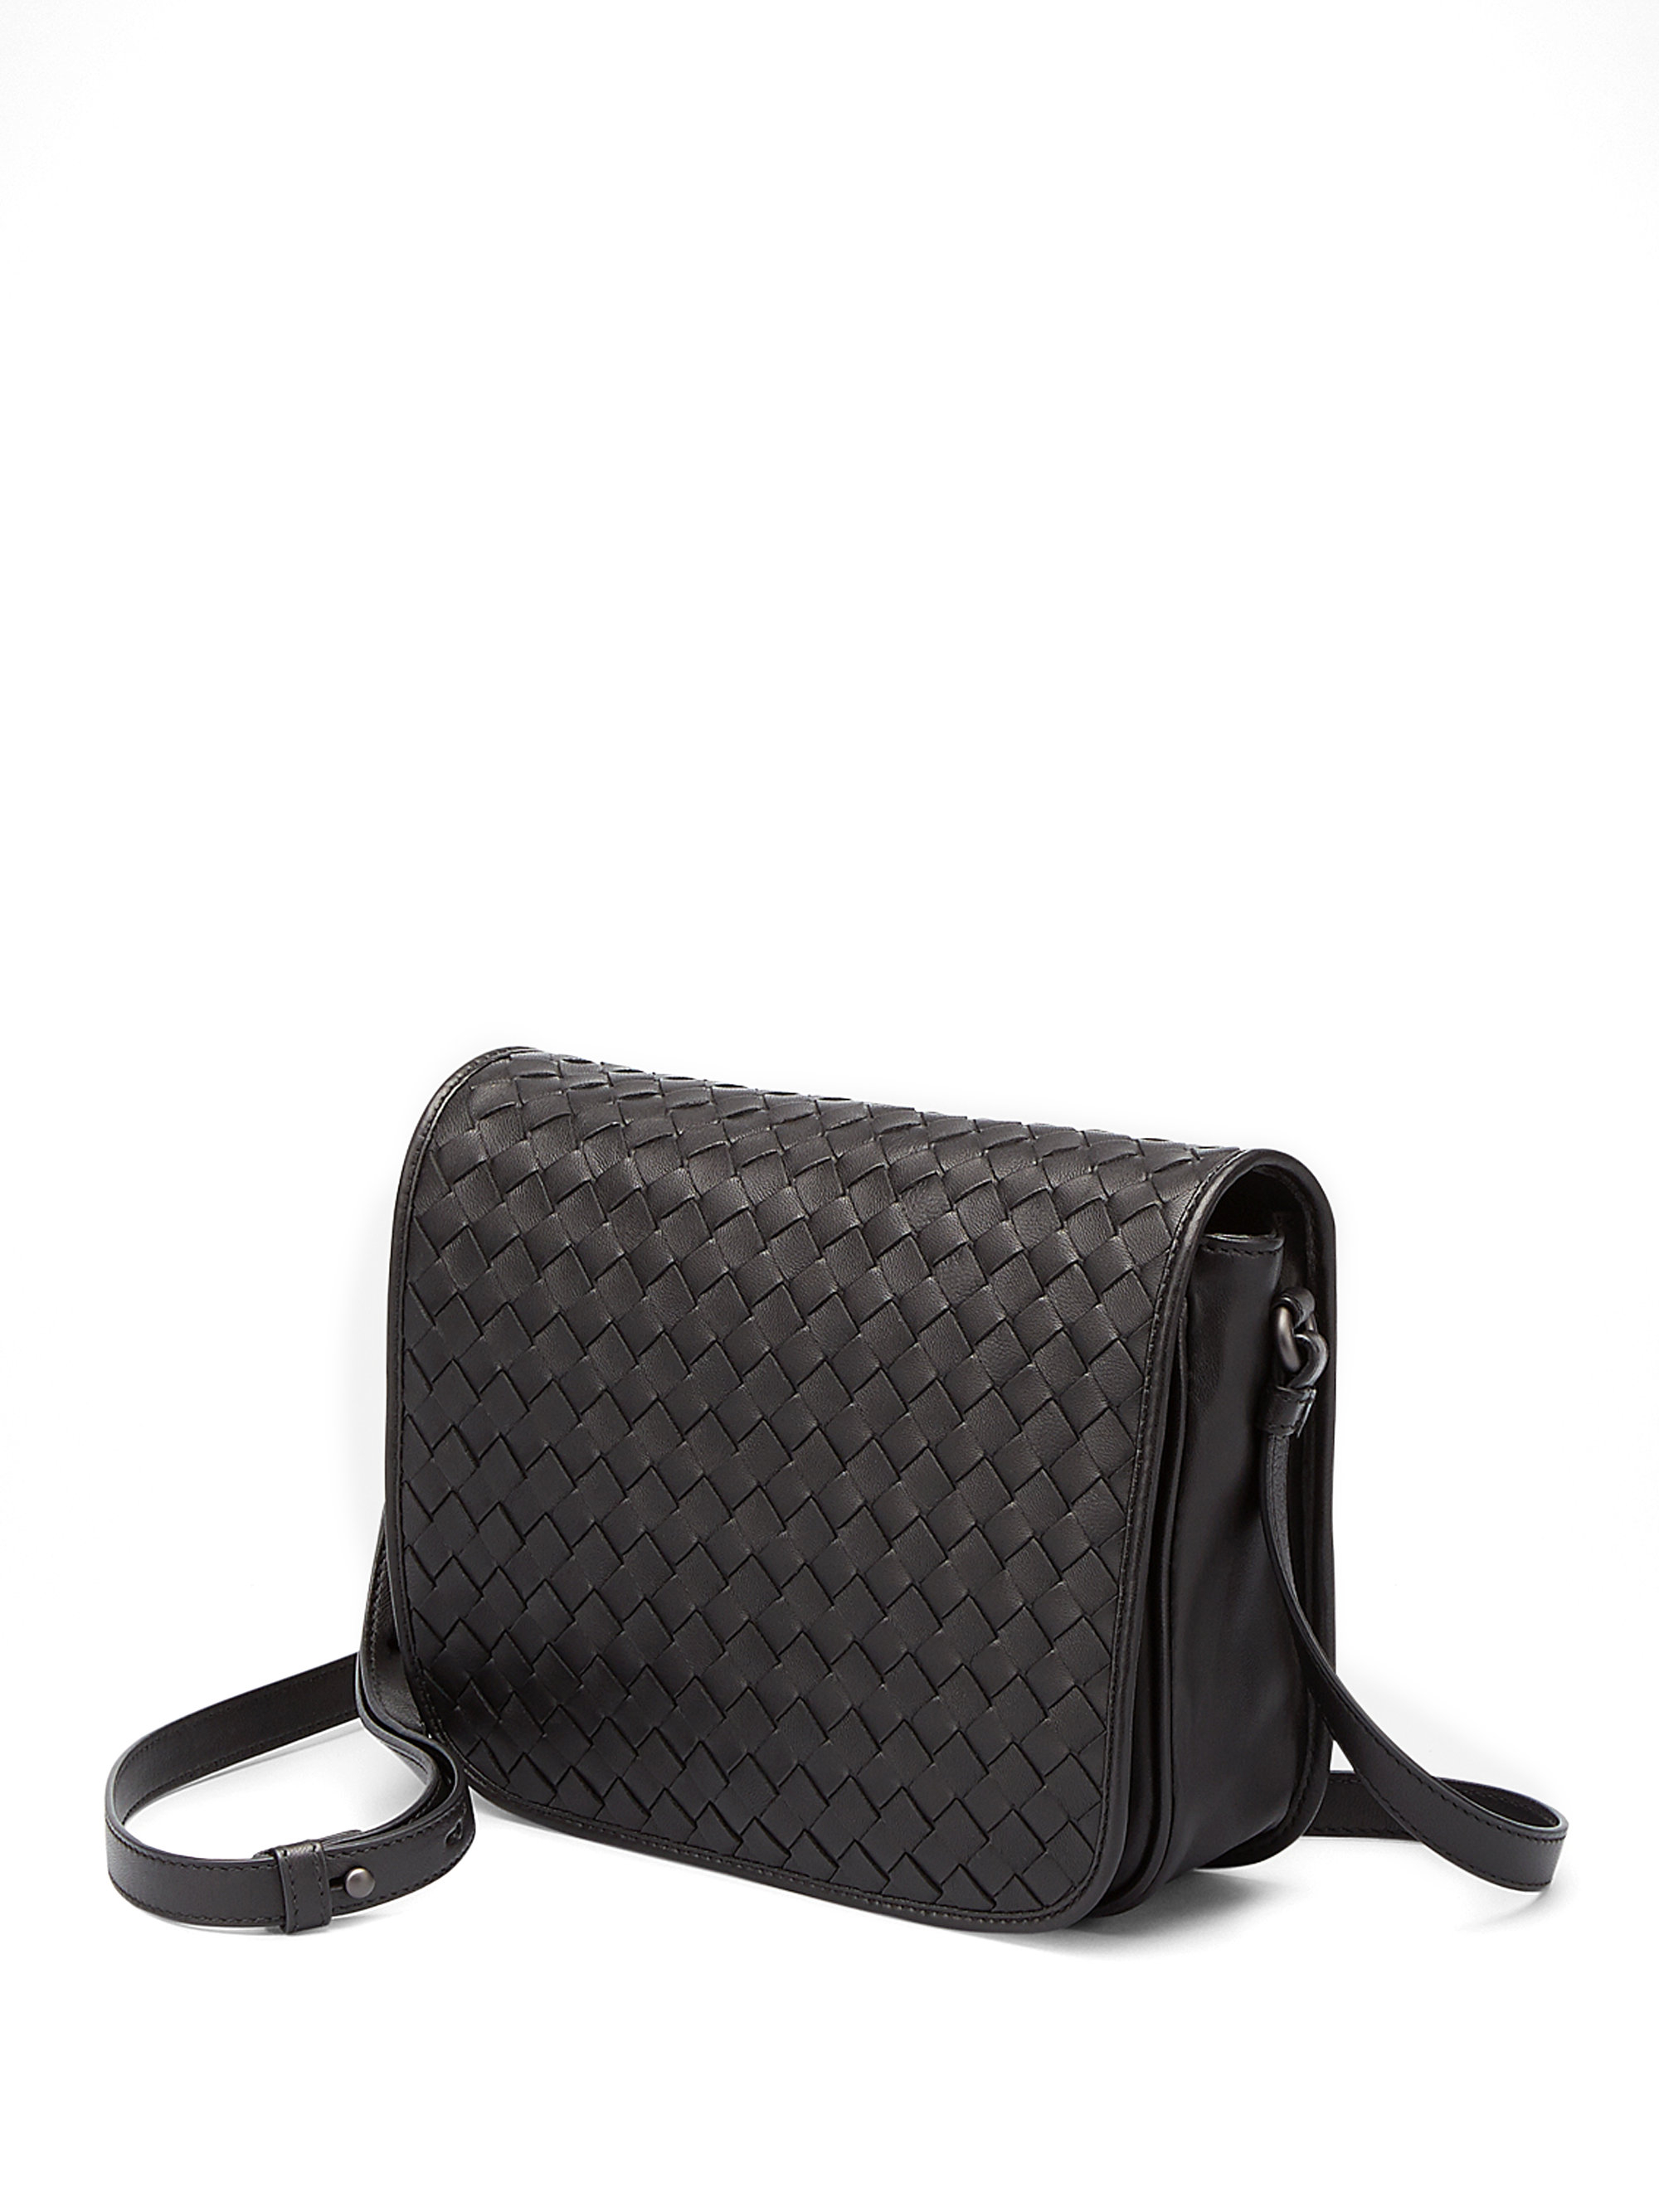 Bottega Veneta Small Woven Flap Shoulder Bag in Black | Lyst